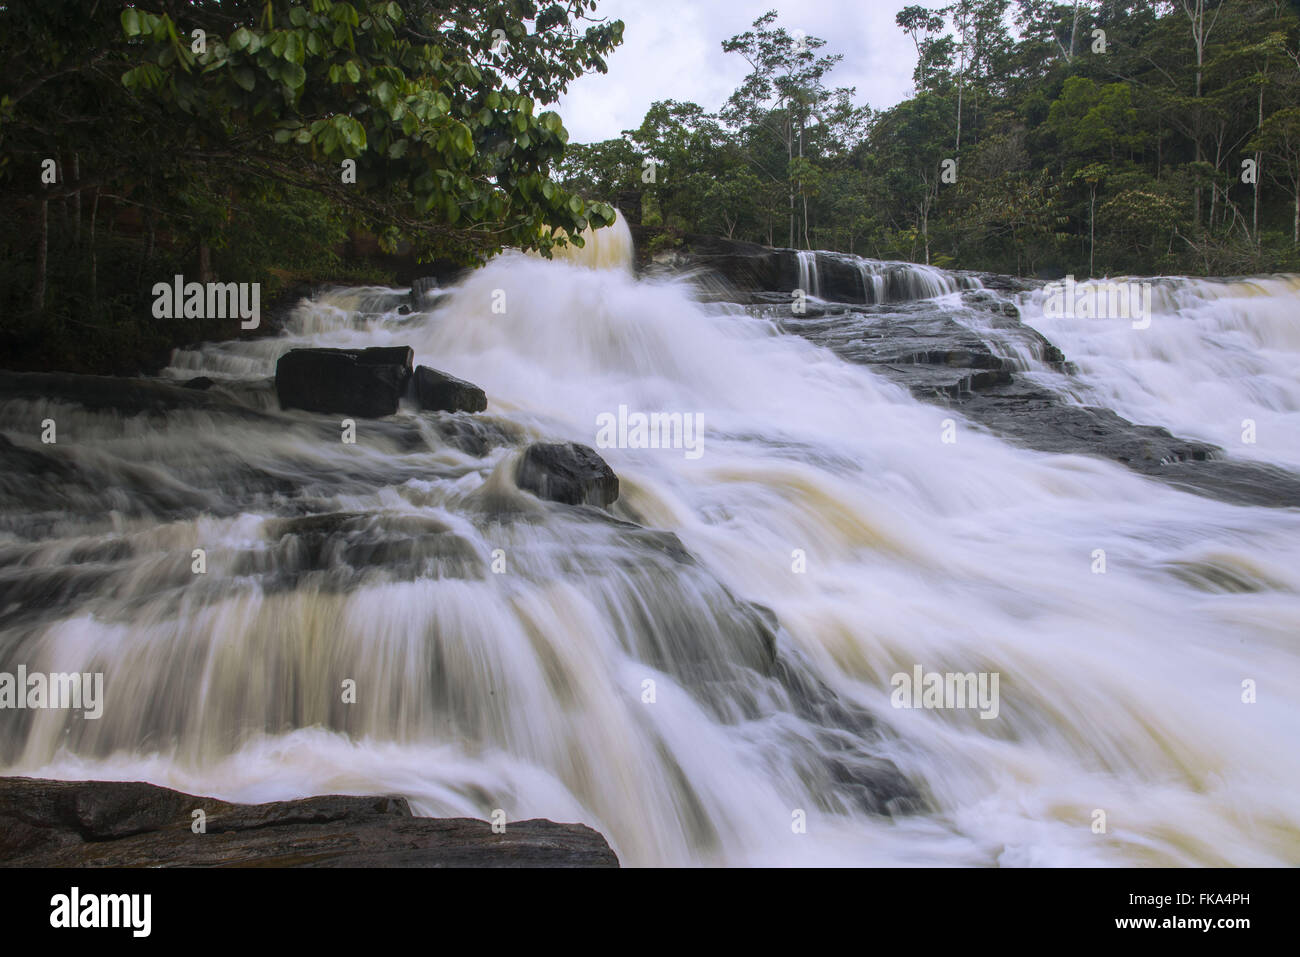 Wasserfall im Dorf Rio Baiano Tremembe - lokal auch bekannt als Wasserfall Tremembe Stockfoto